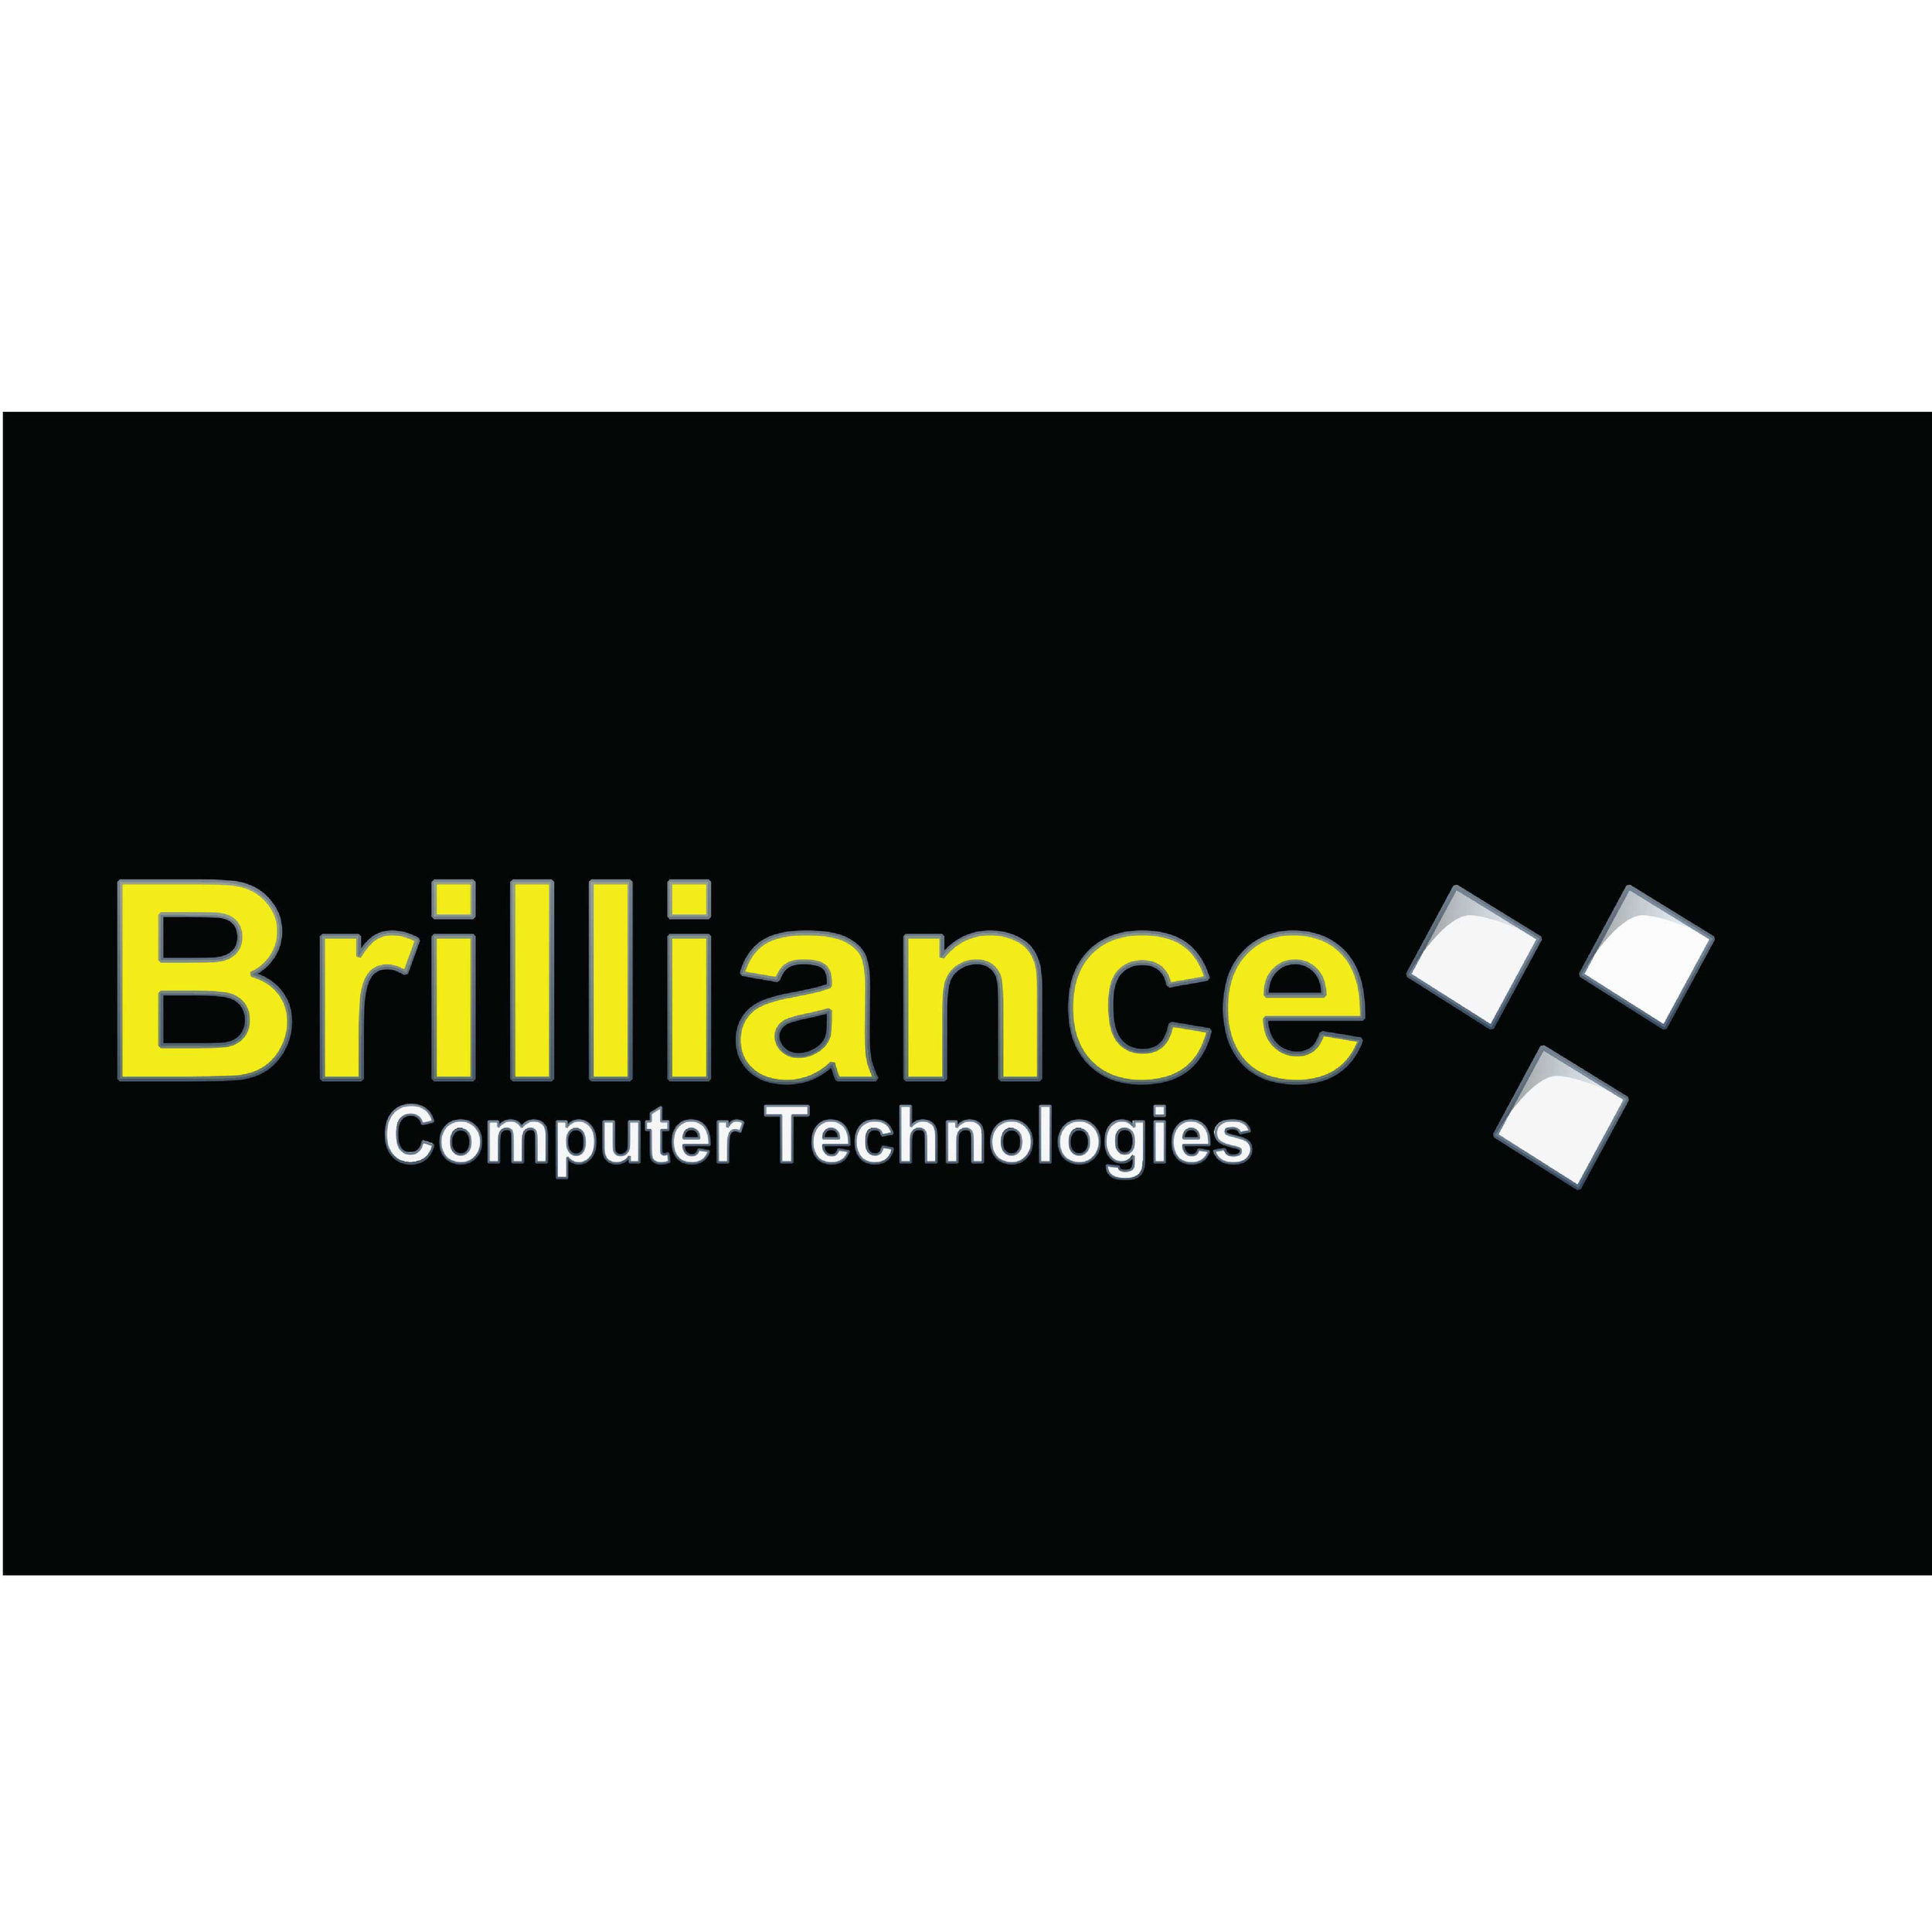 Brilliance Computer Technologies